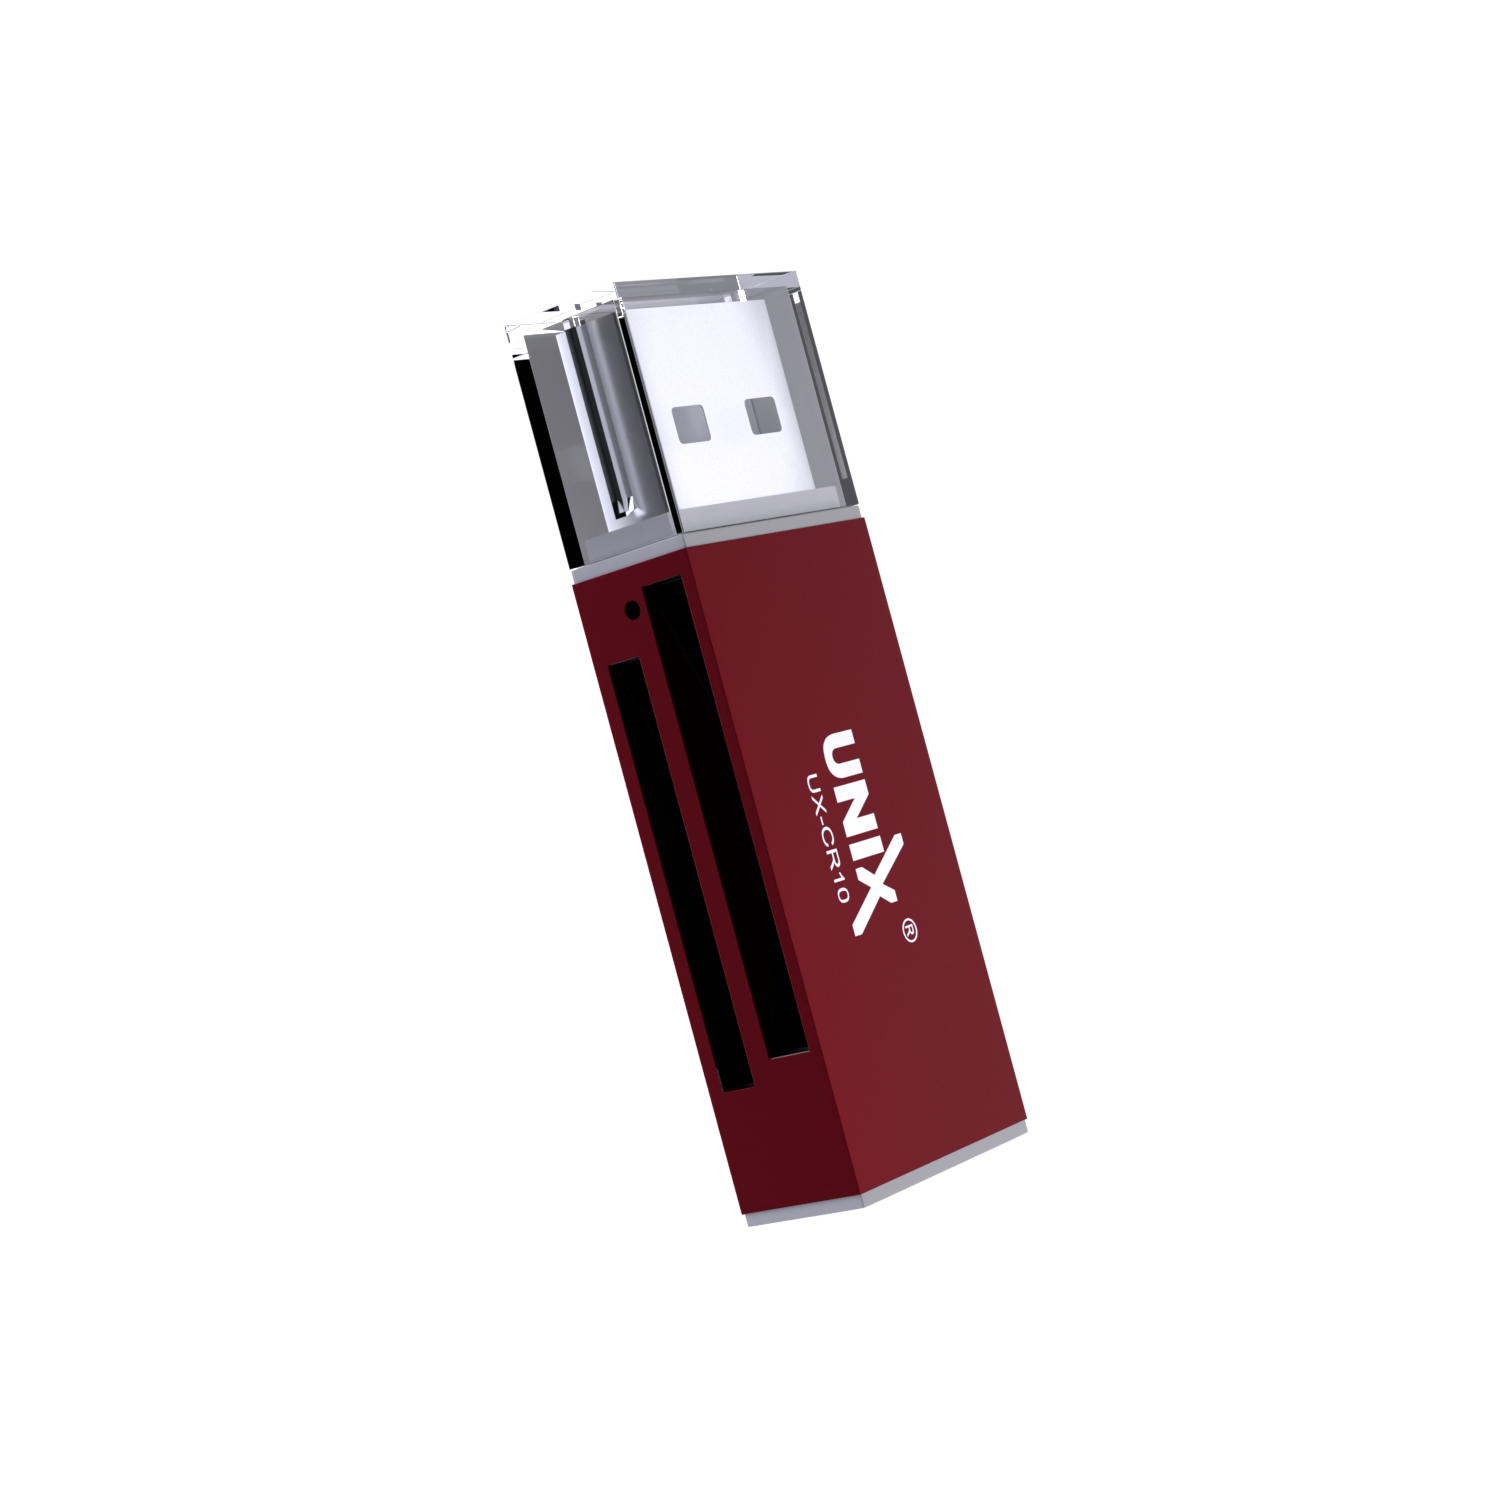 Unix UX-CR10 Card Reader | USB 3.0, High-Speed Data Transfer left